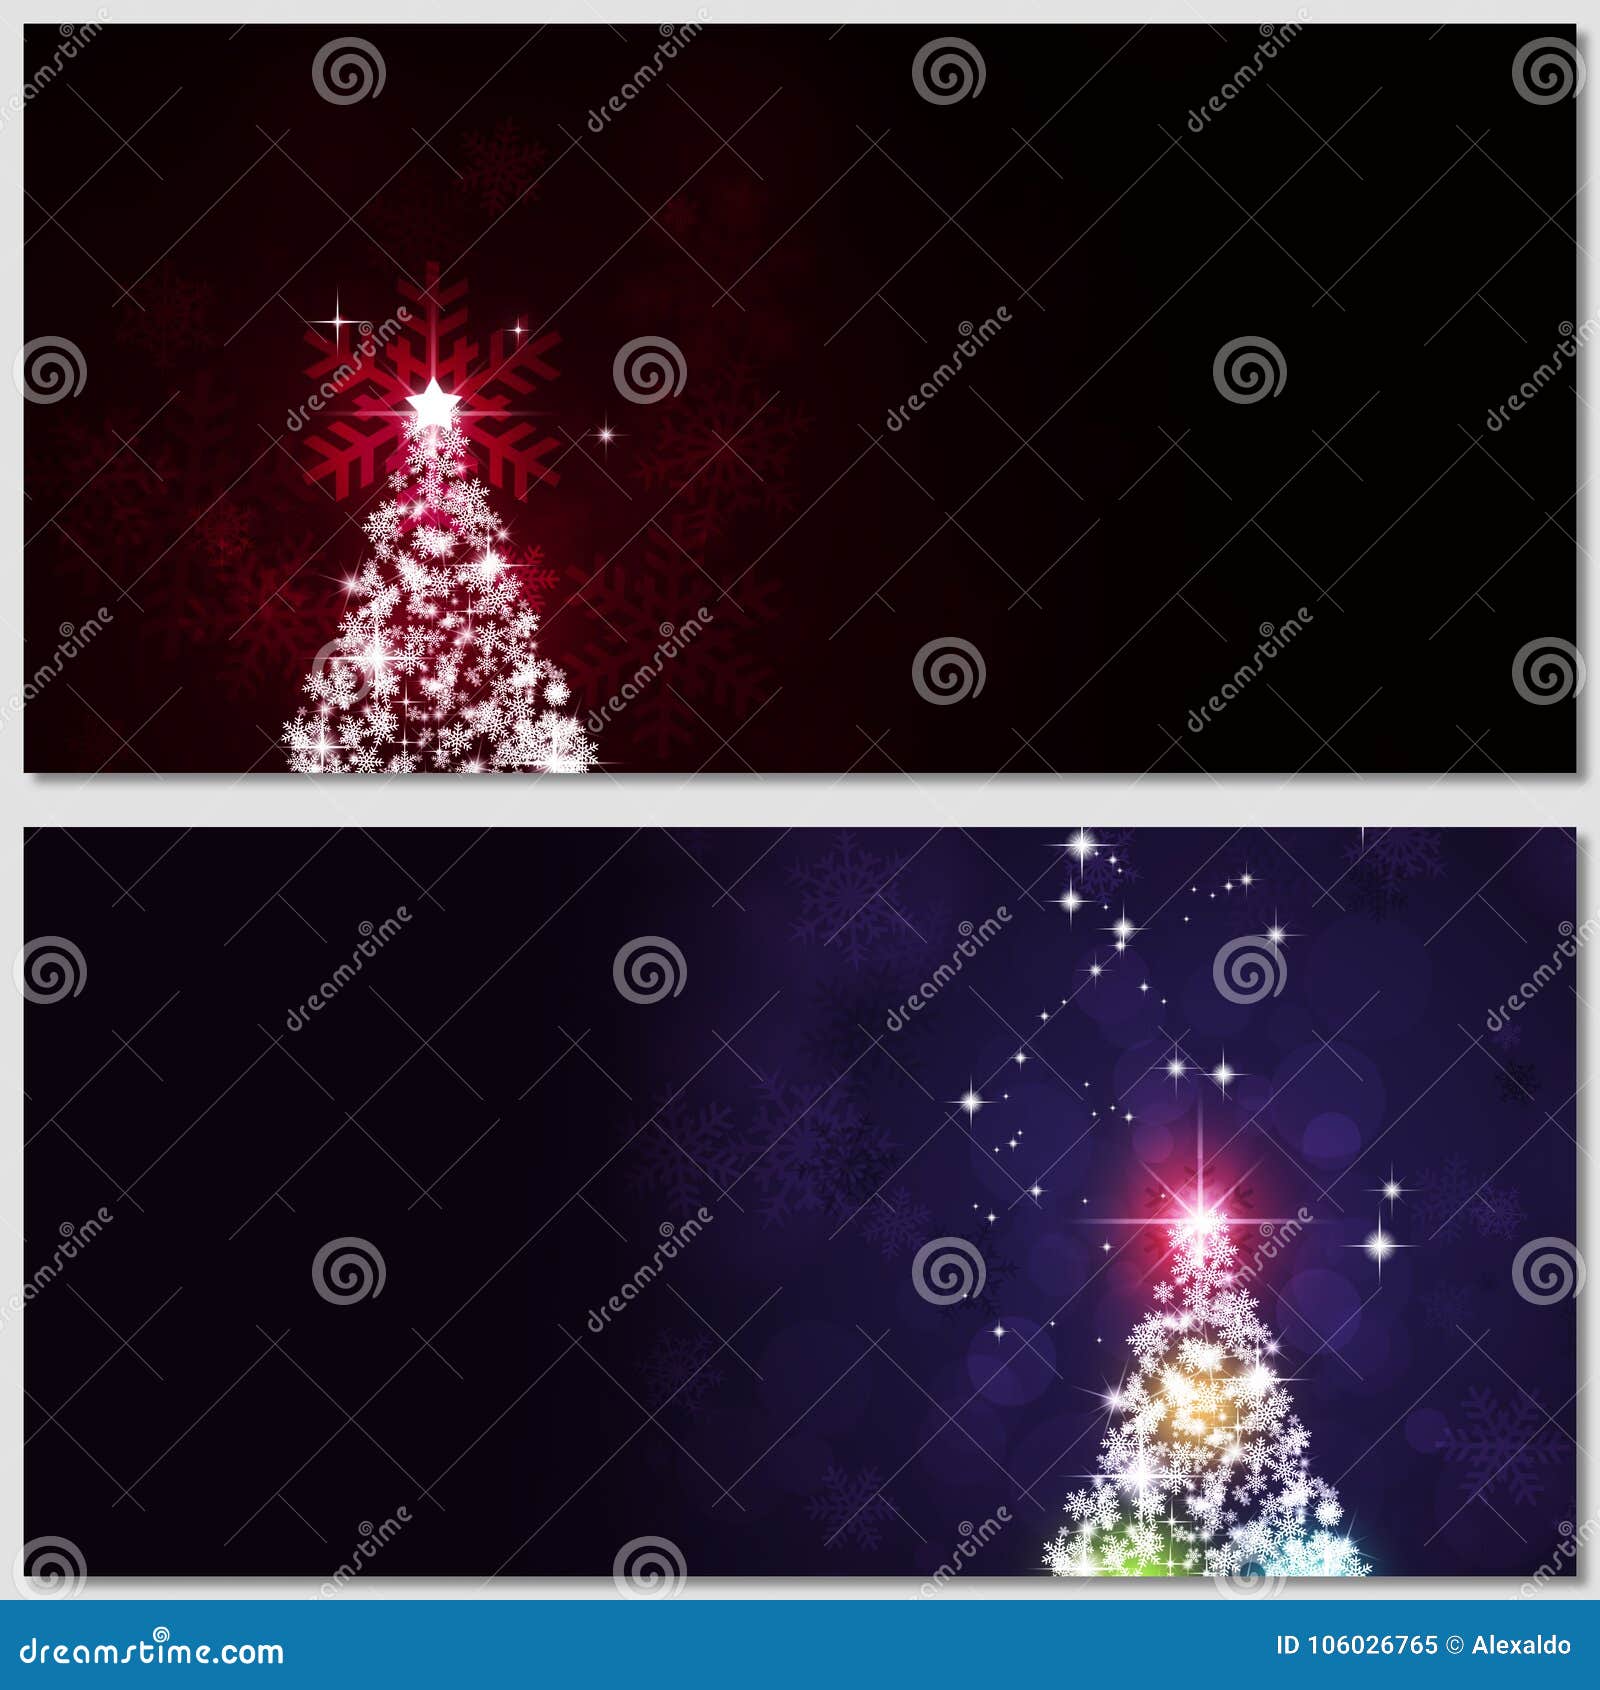 Christmas Tree Banners stock illustration. Illustration of holiday ...